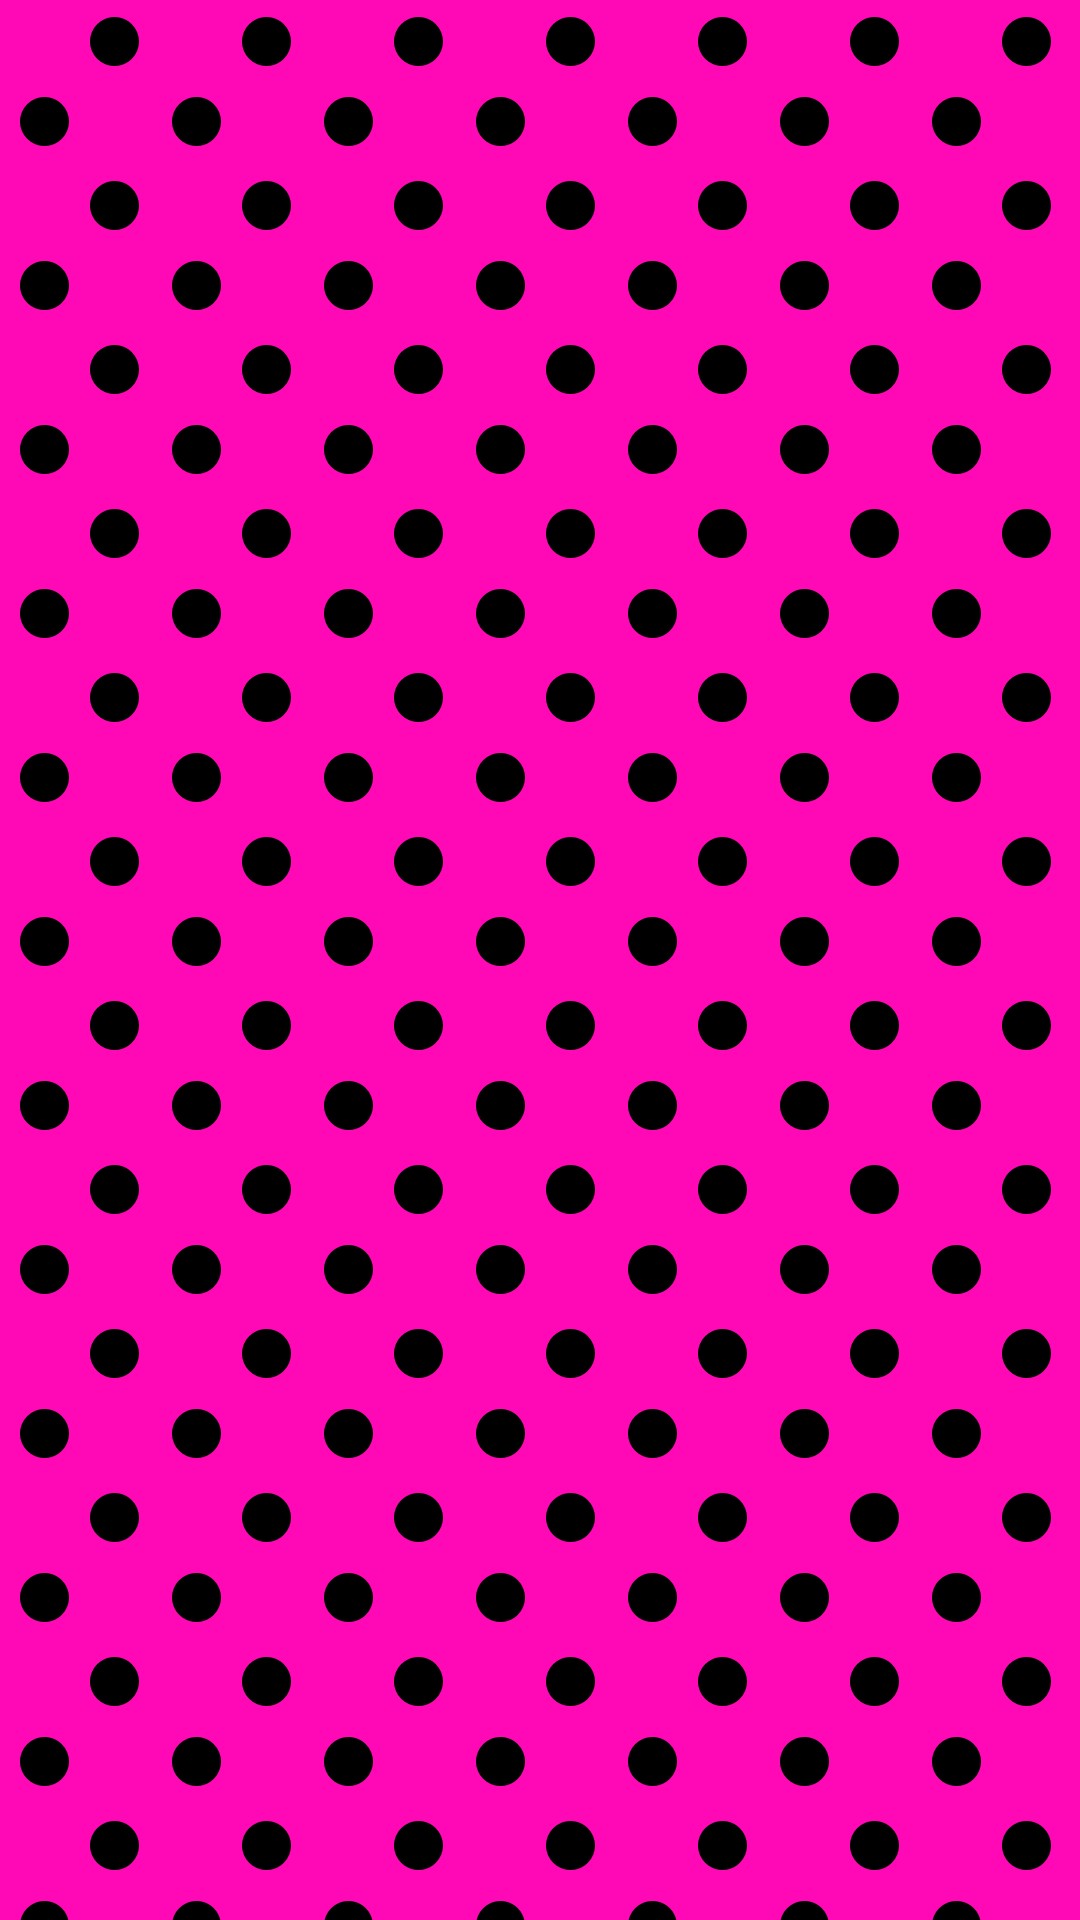 Polkadot Pink iPhone Wallpaper